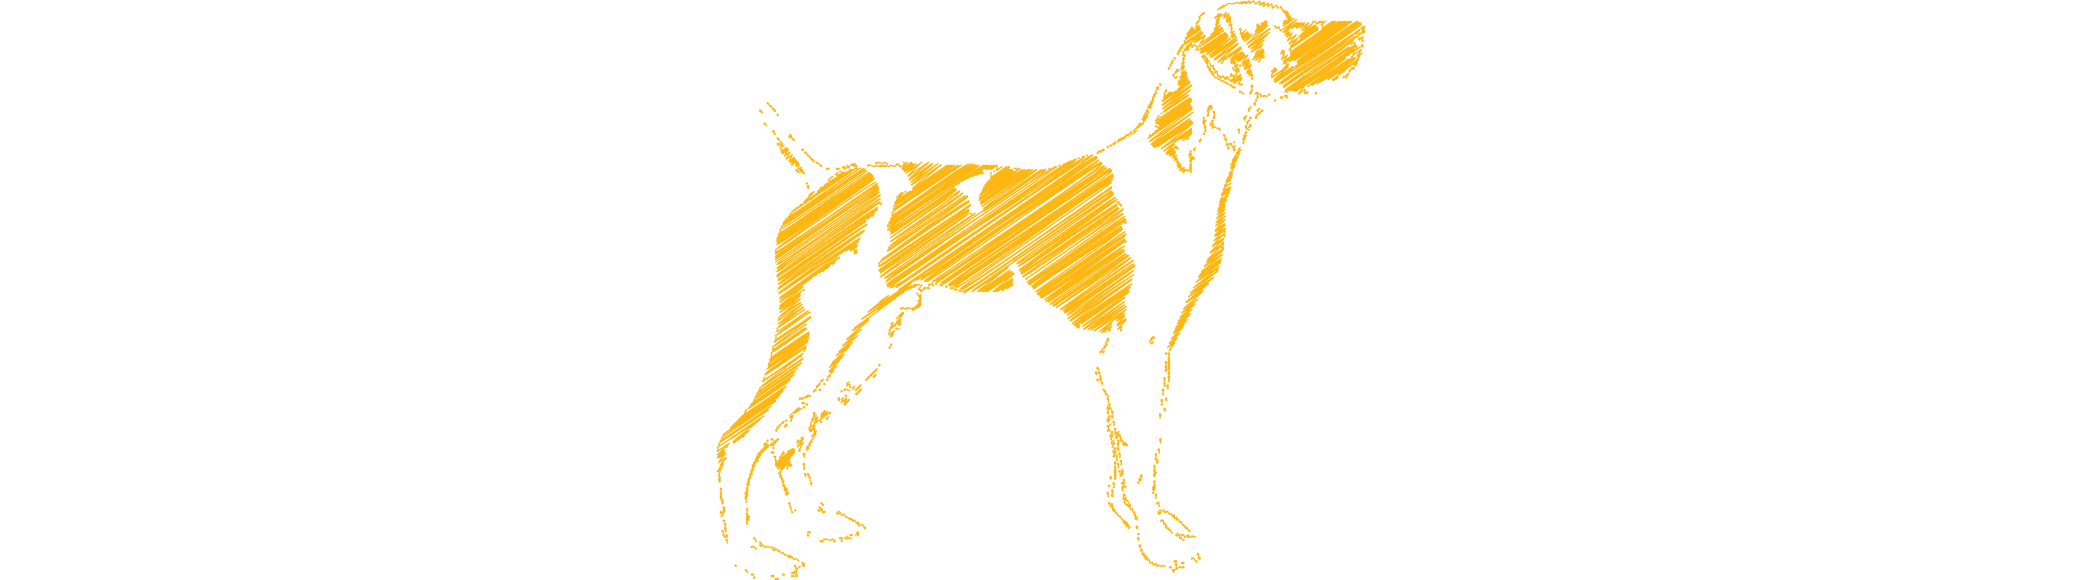 Hound & Gatos drawing of Yellow and White Dog